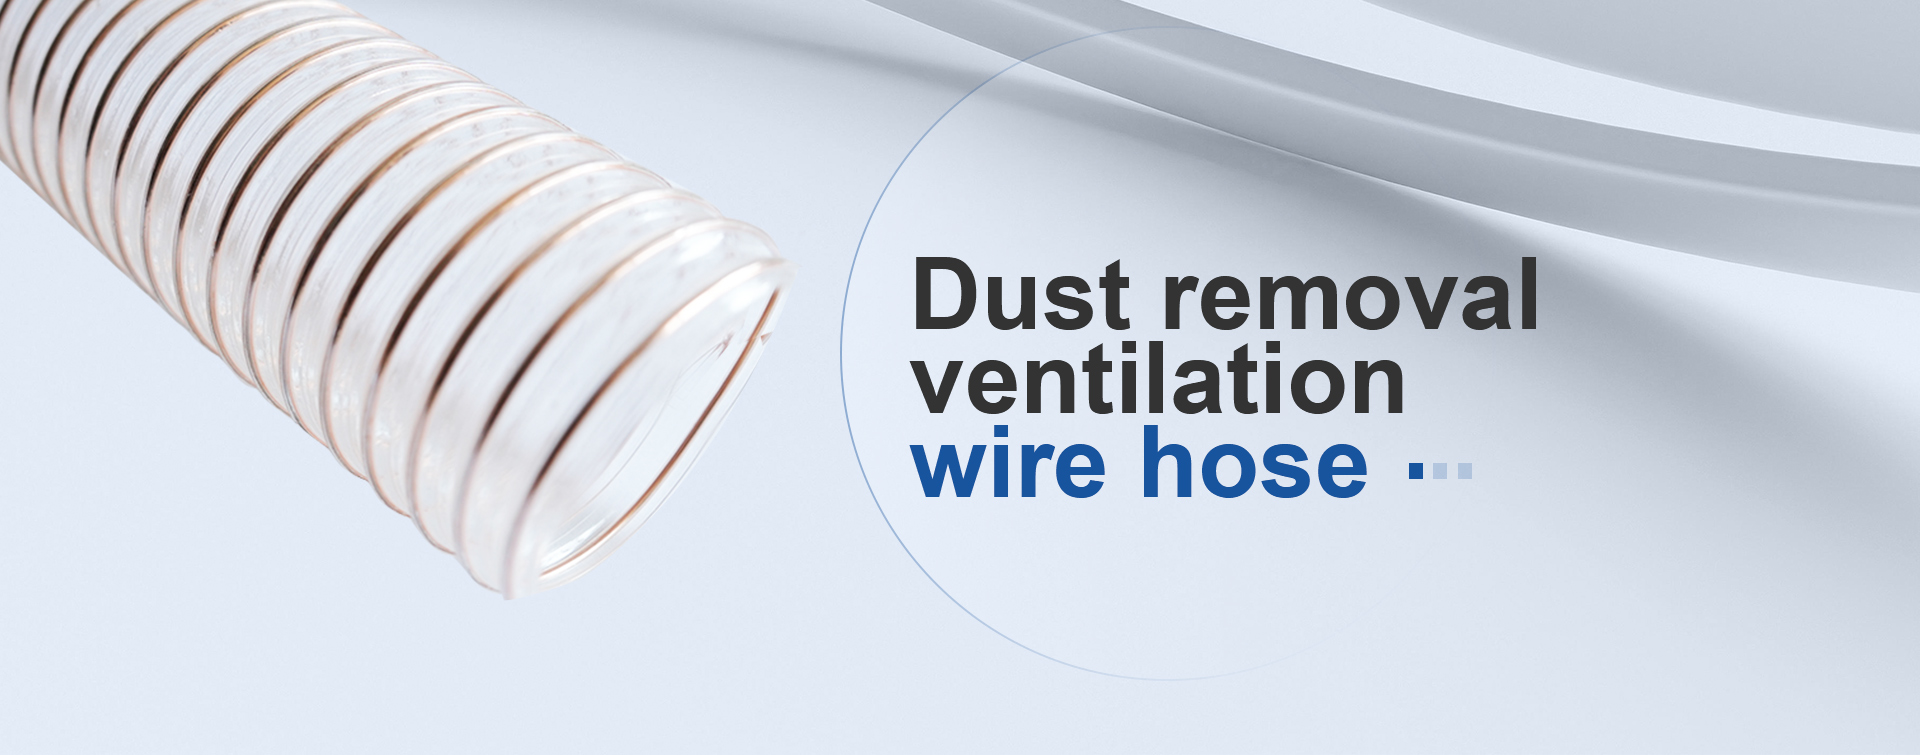 Dust remova ventilation wire hose